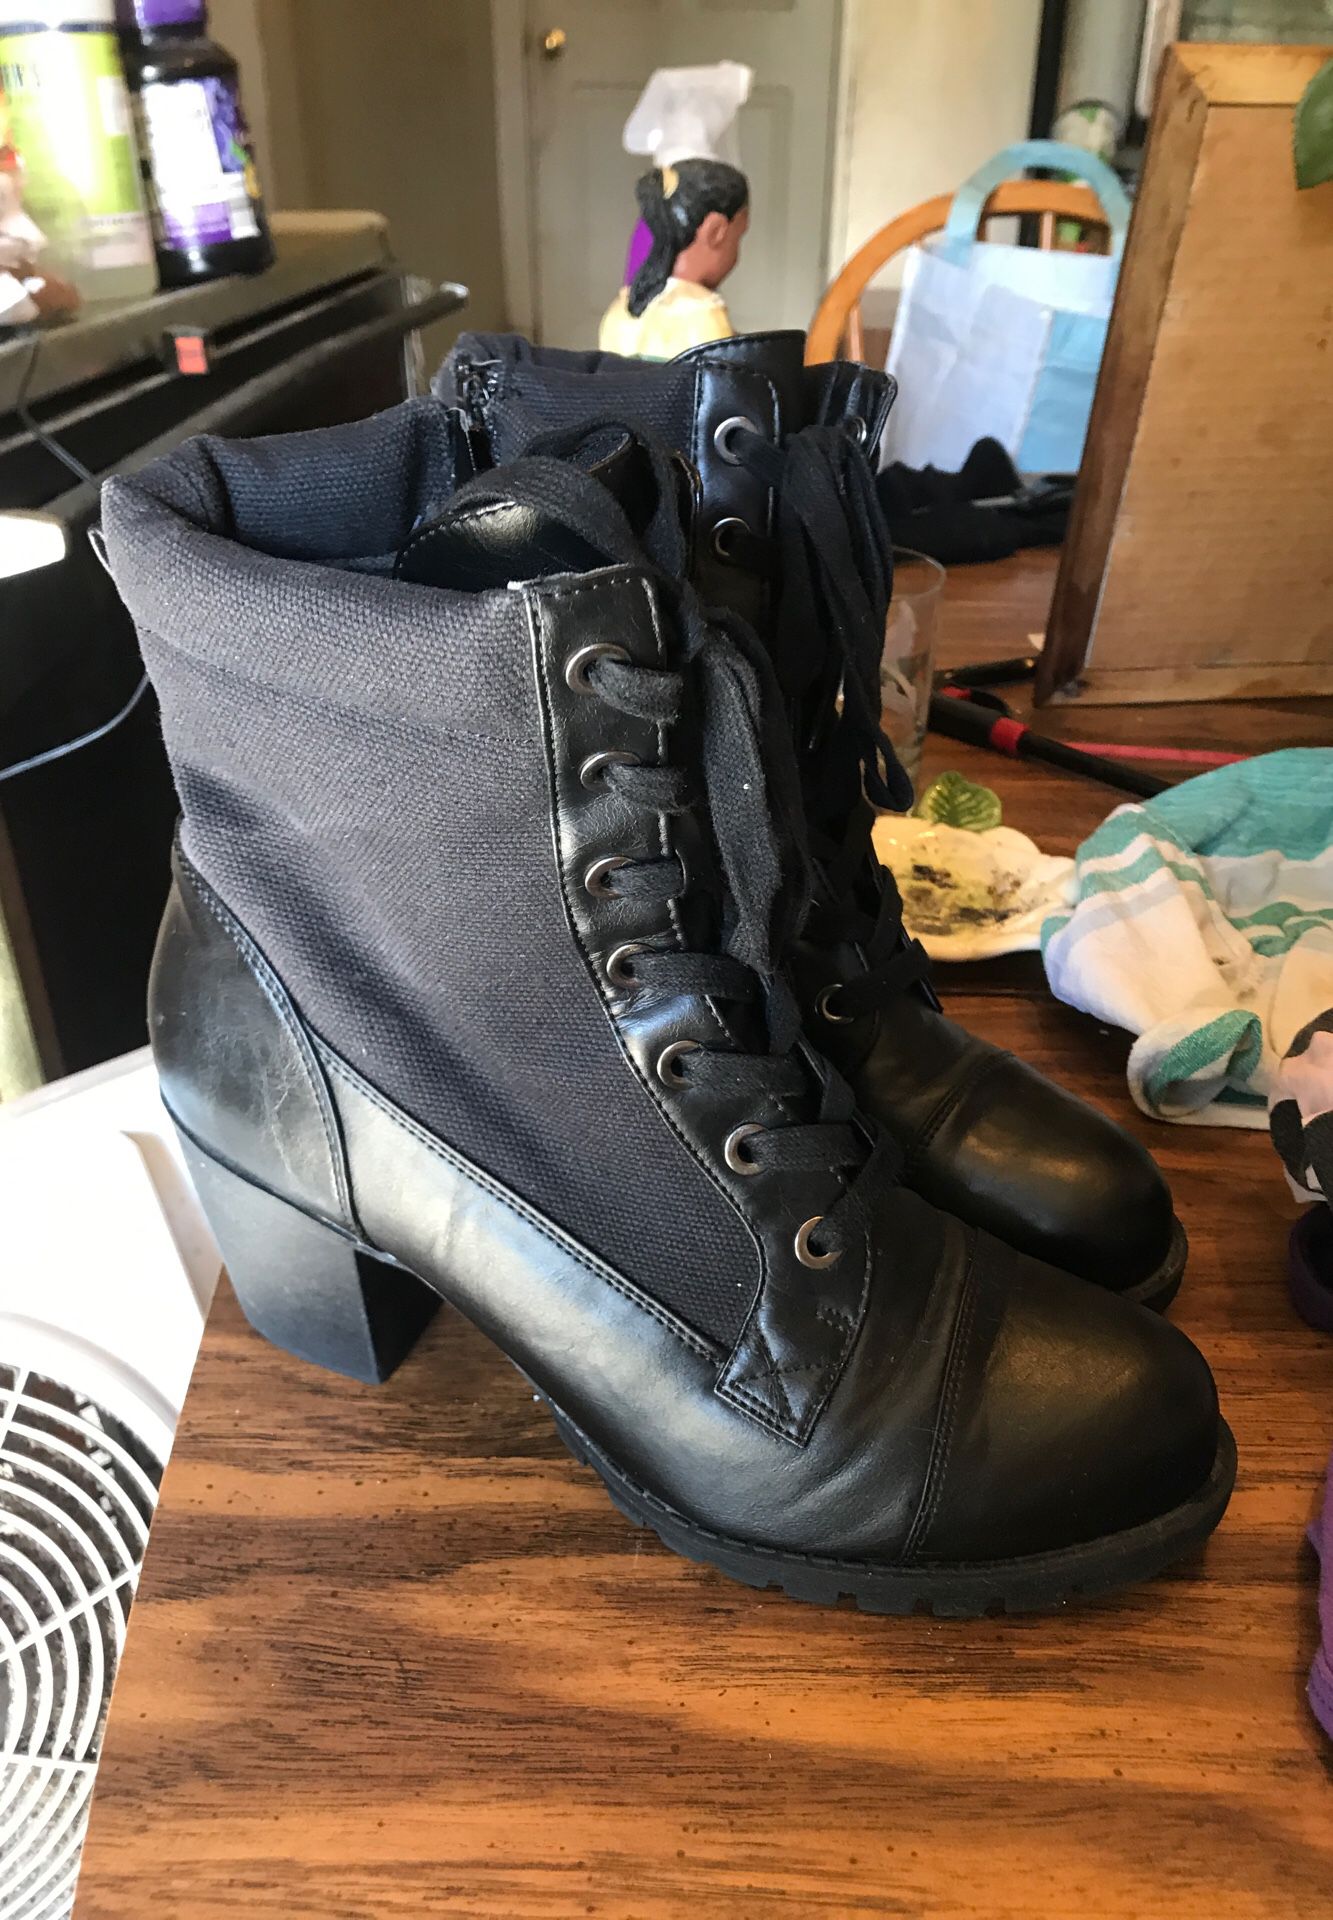 Ladies size 8.5 XOXO Black zipper boots with heel